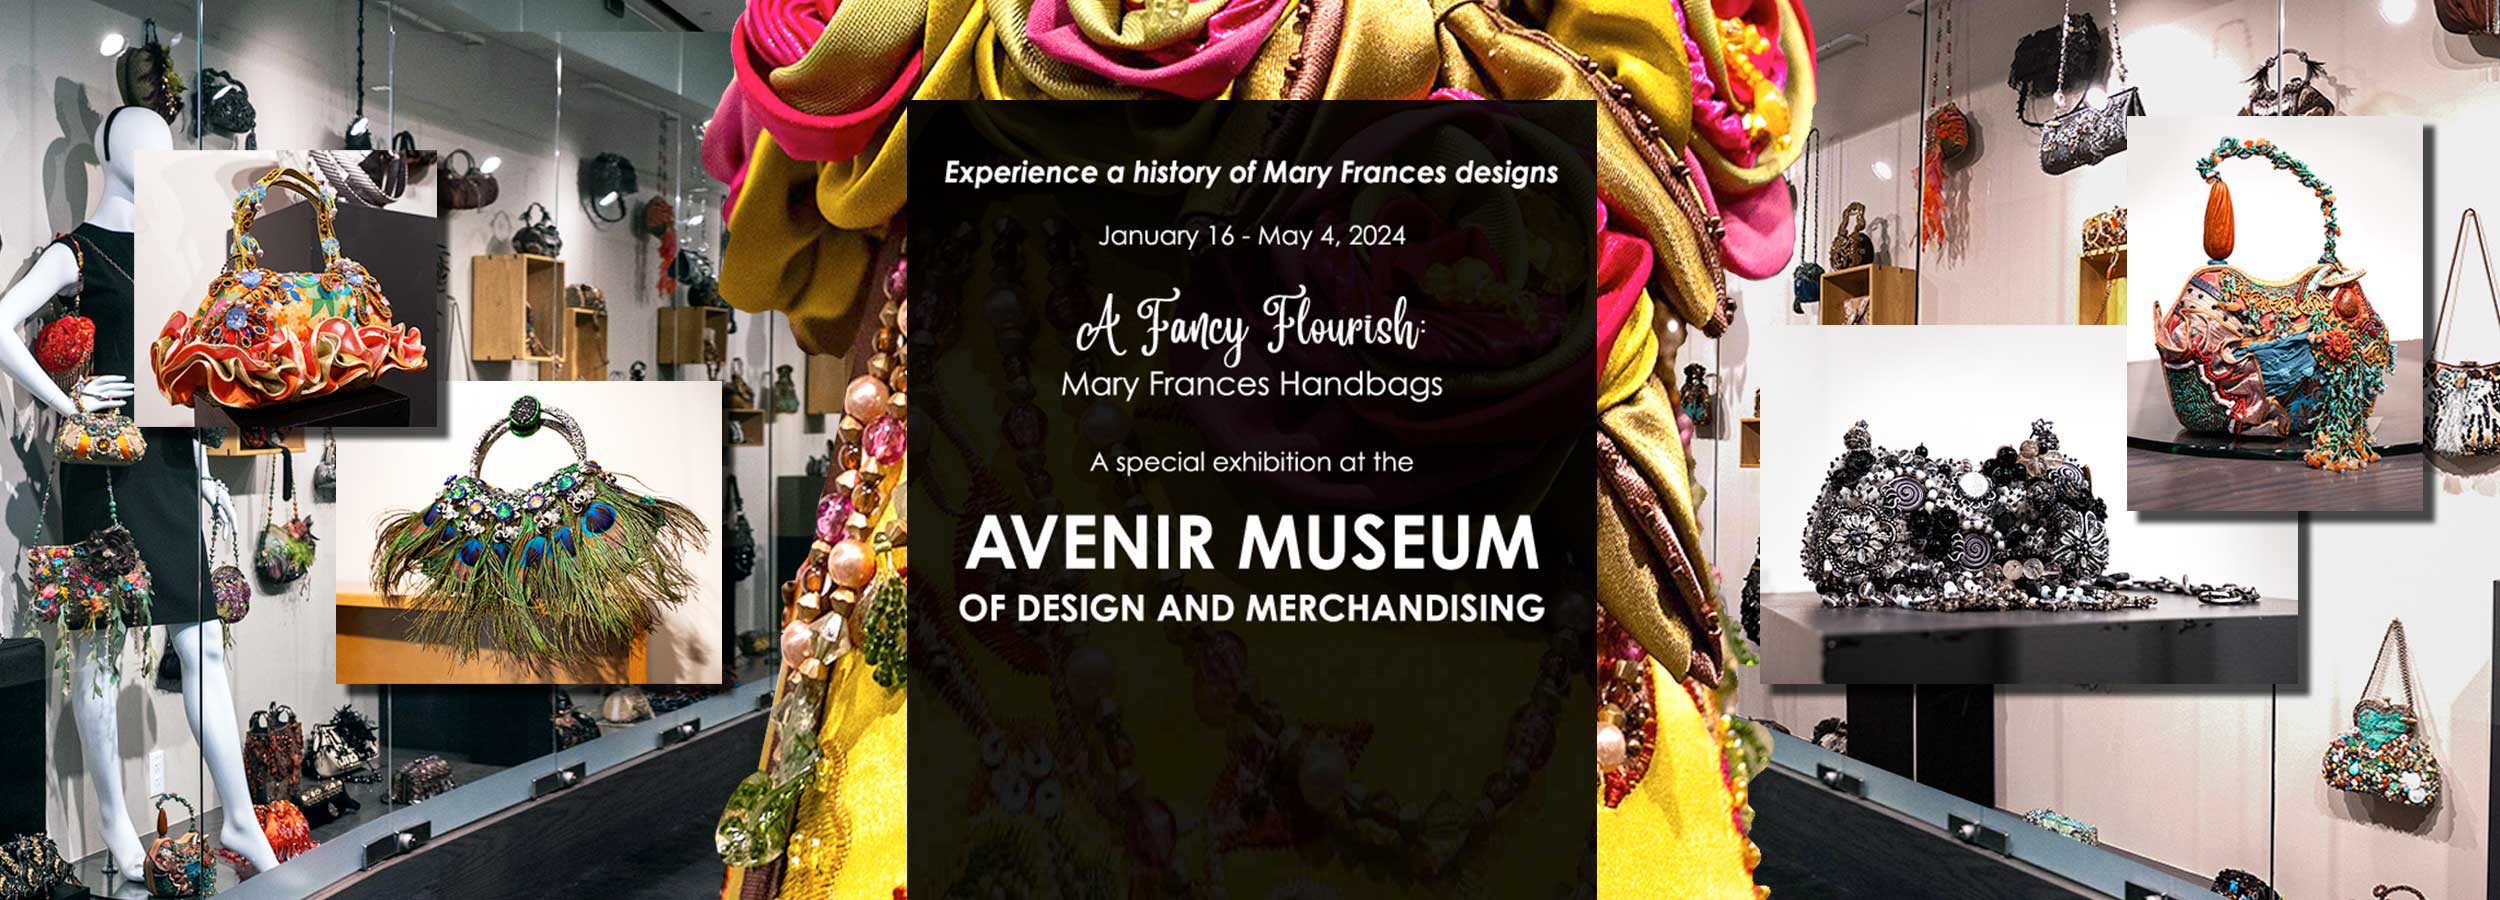 Avenir Museum exhibit of Mary Frances Handbags